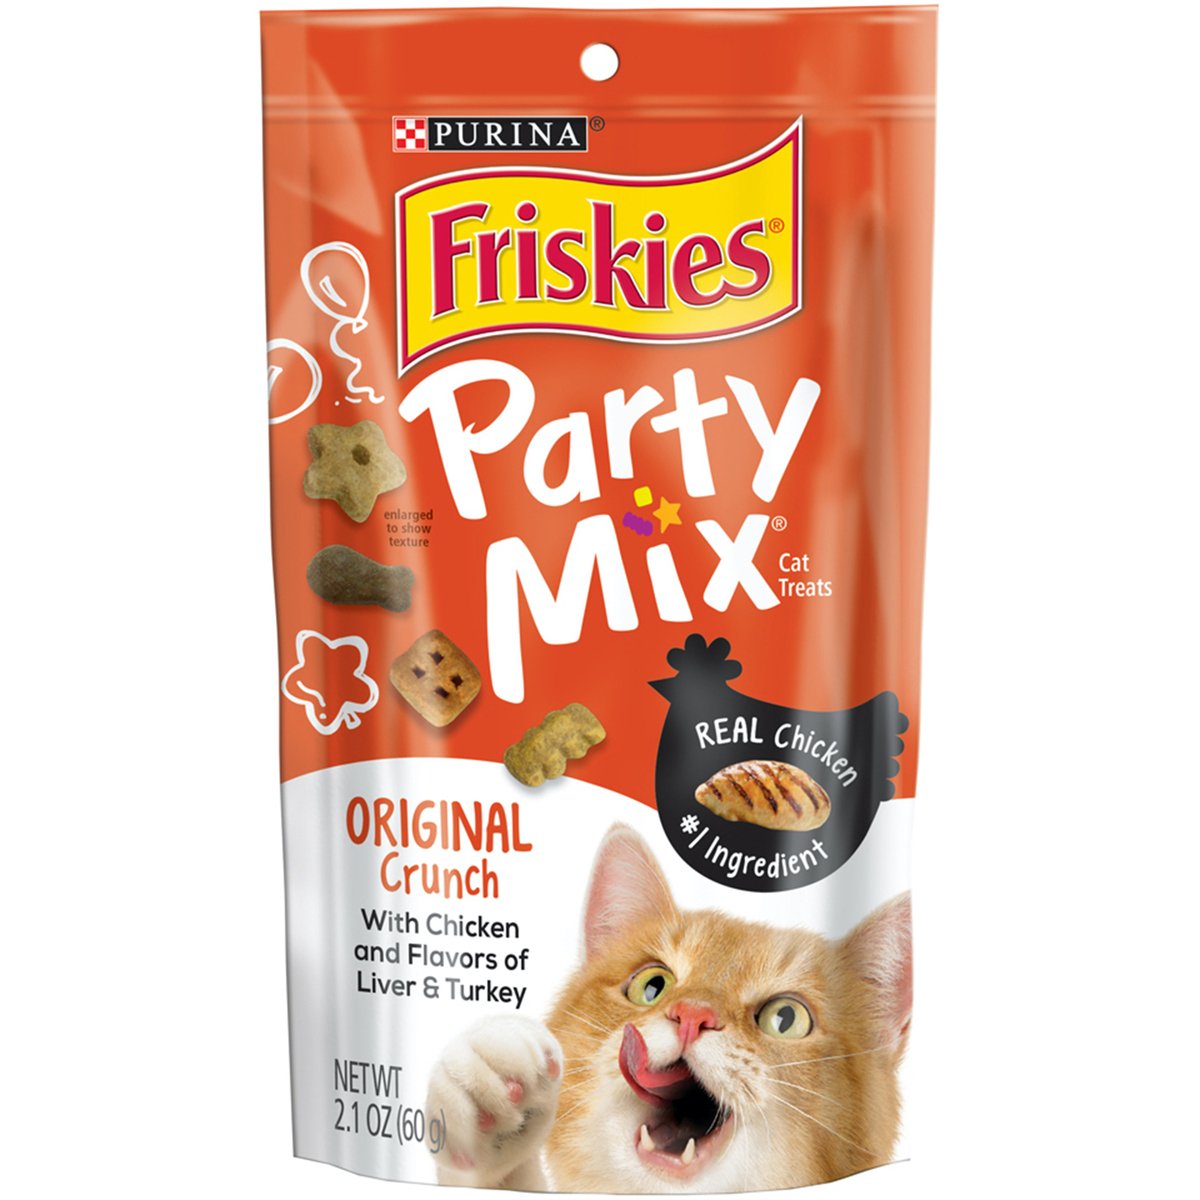 Purina Friskies Party Mix Cat Treats Original Crunch Cat Food 60 g